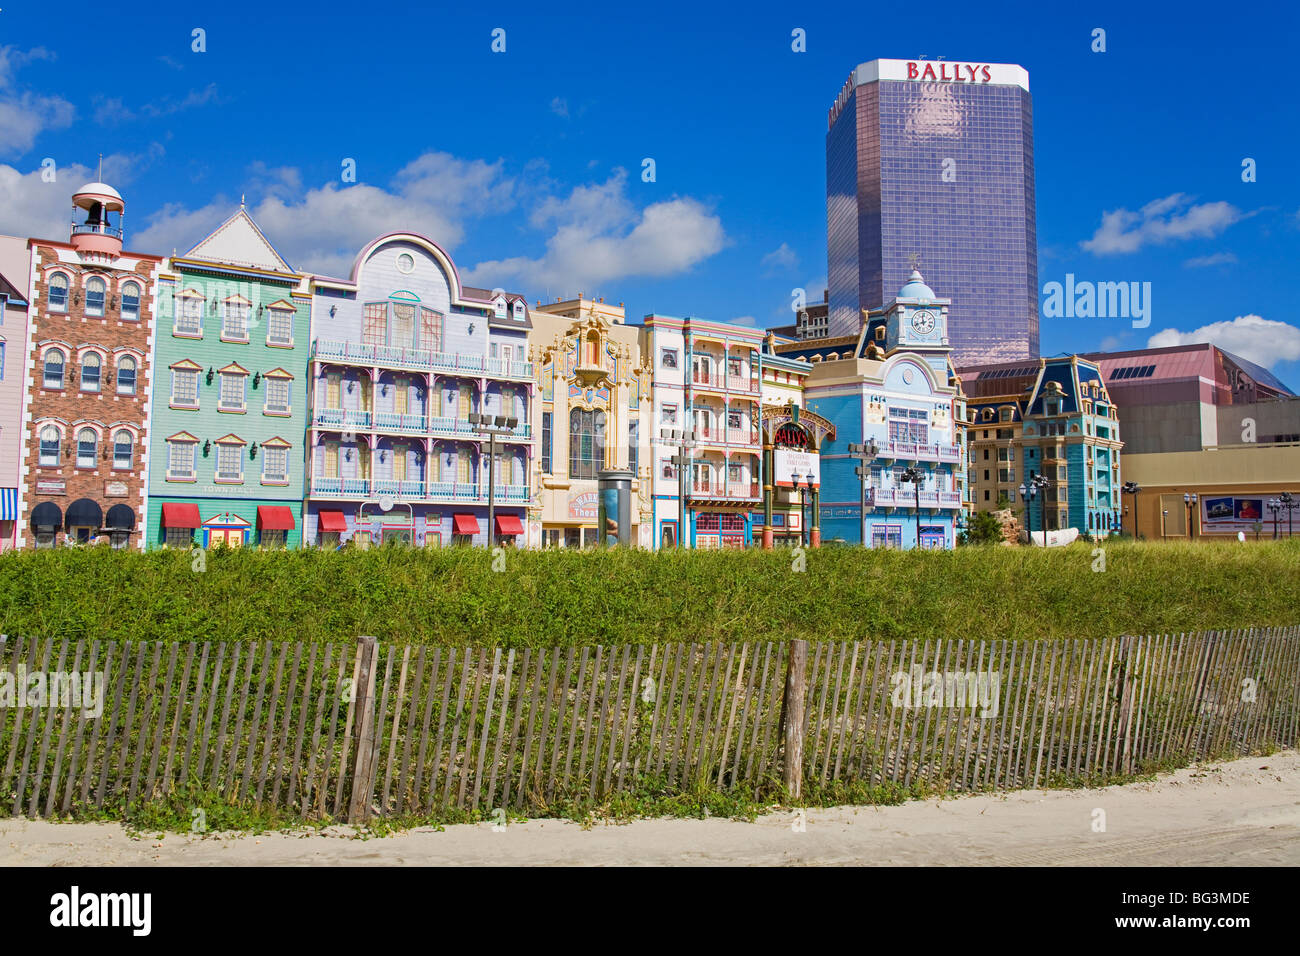 Bally's Casino and Hotel, Atlantic City Boardwalk, New Jersey, United States of America, North America Stock Photo